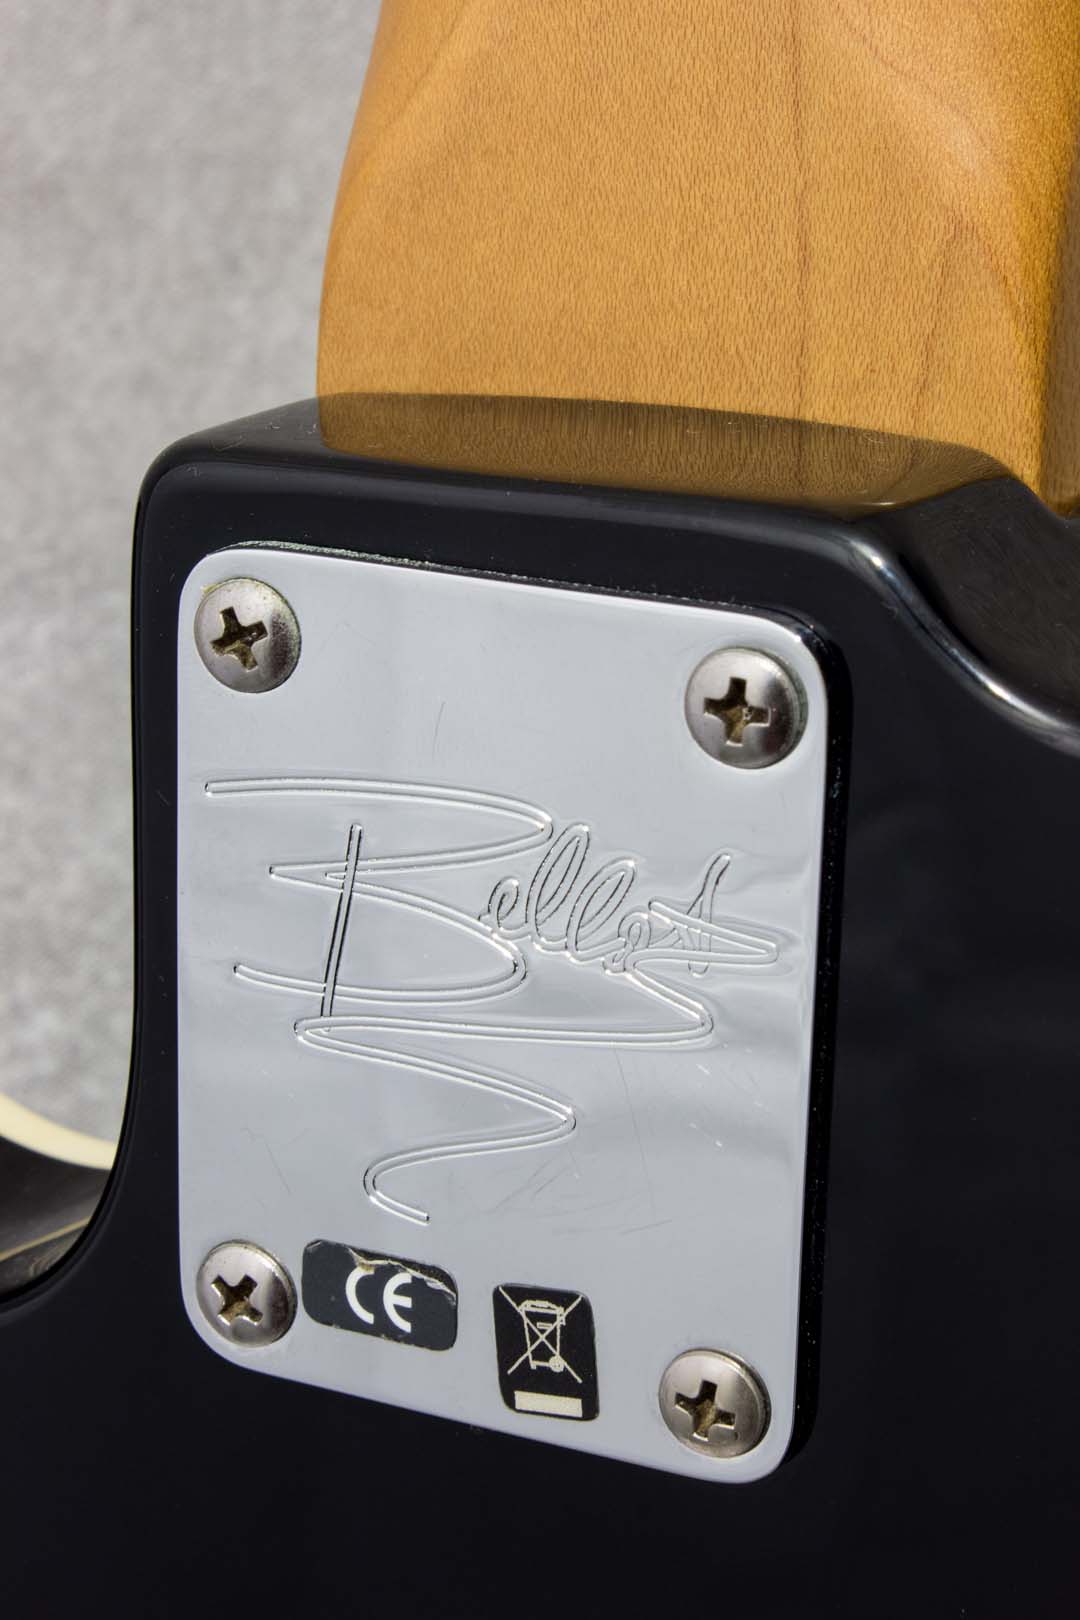 Fender Frank Bello Signature Bass Black 2005